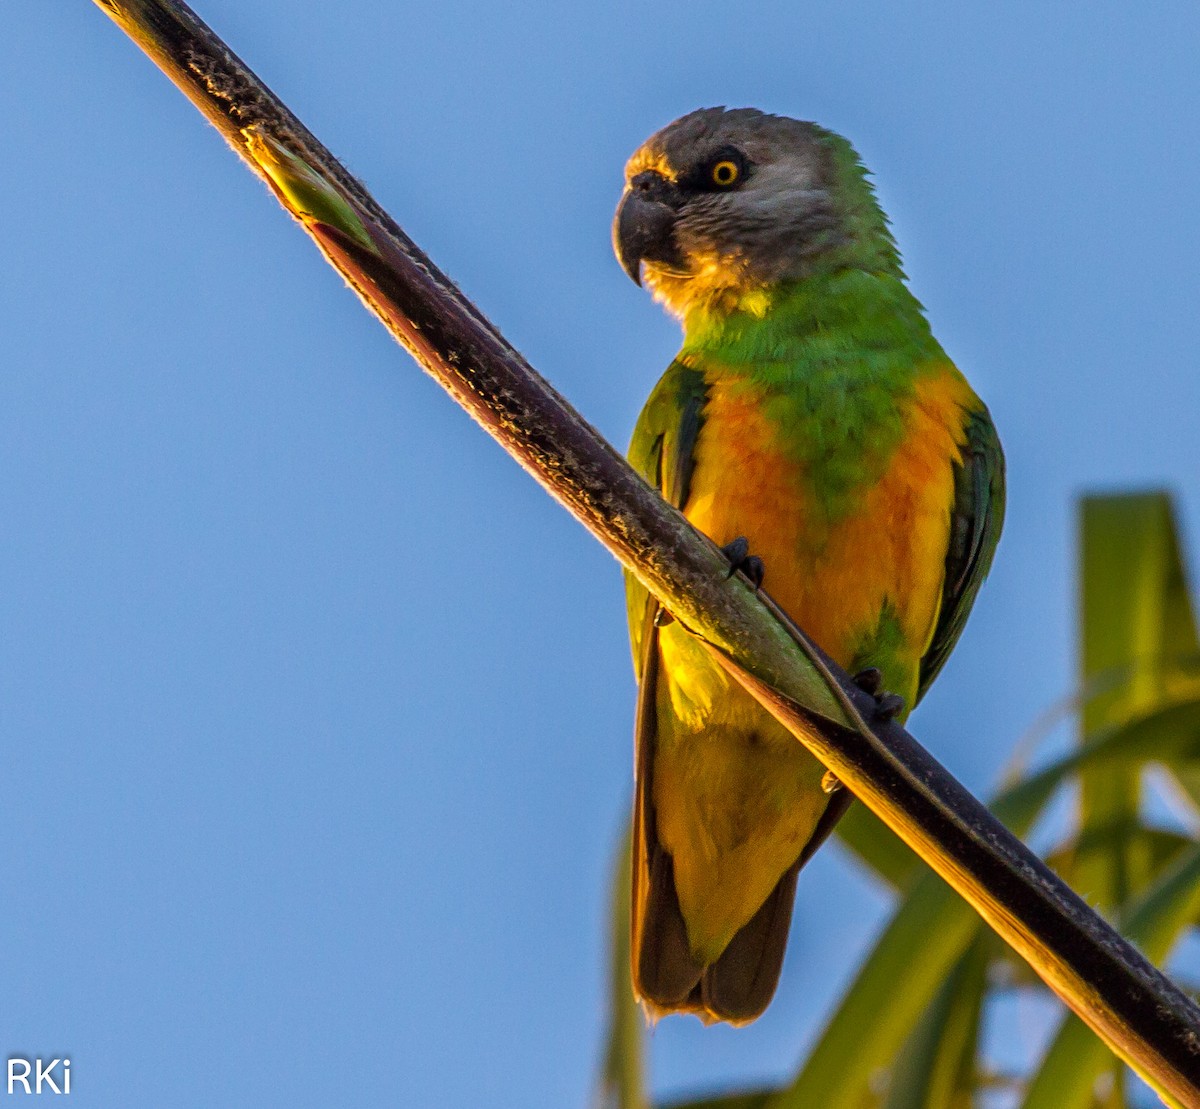 Senegal Parrot - Raino Kinnunen